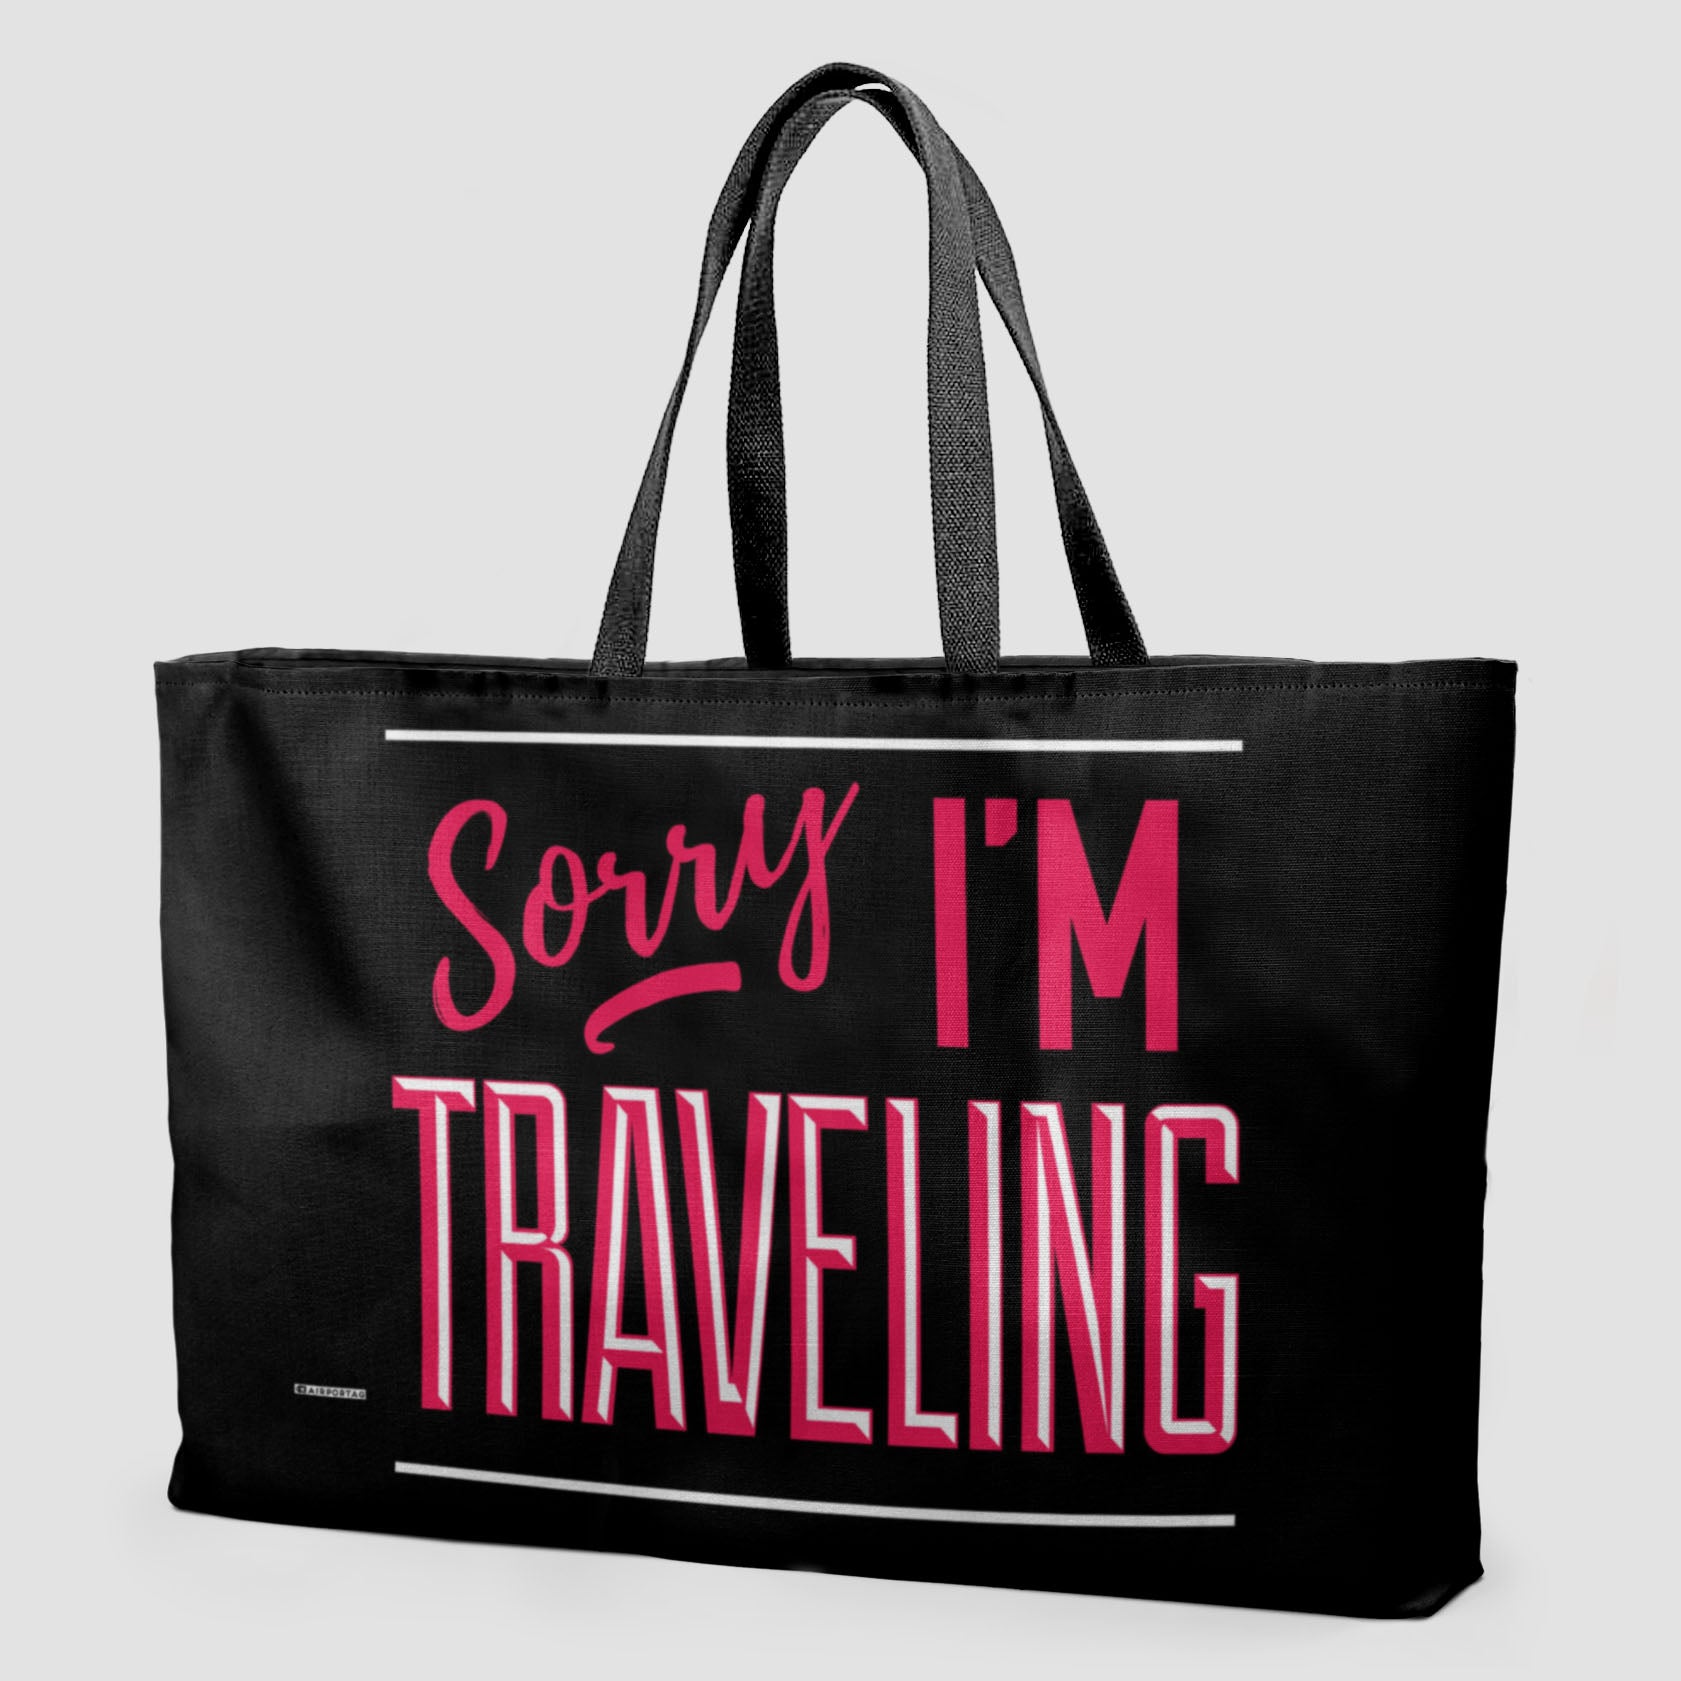 Sorry, I'm traveling - Weekender Bag - Airportag